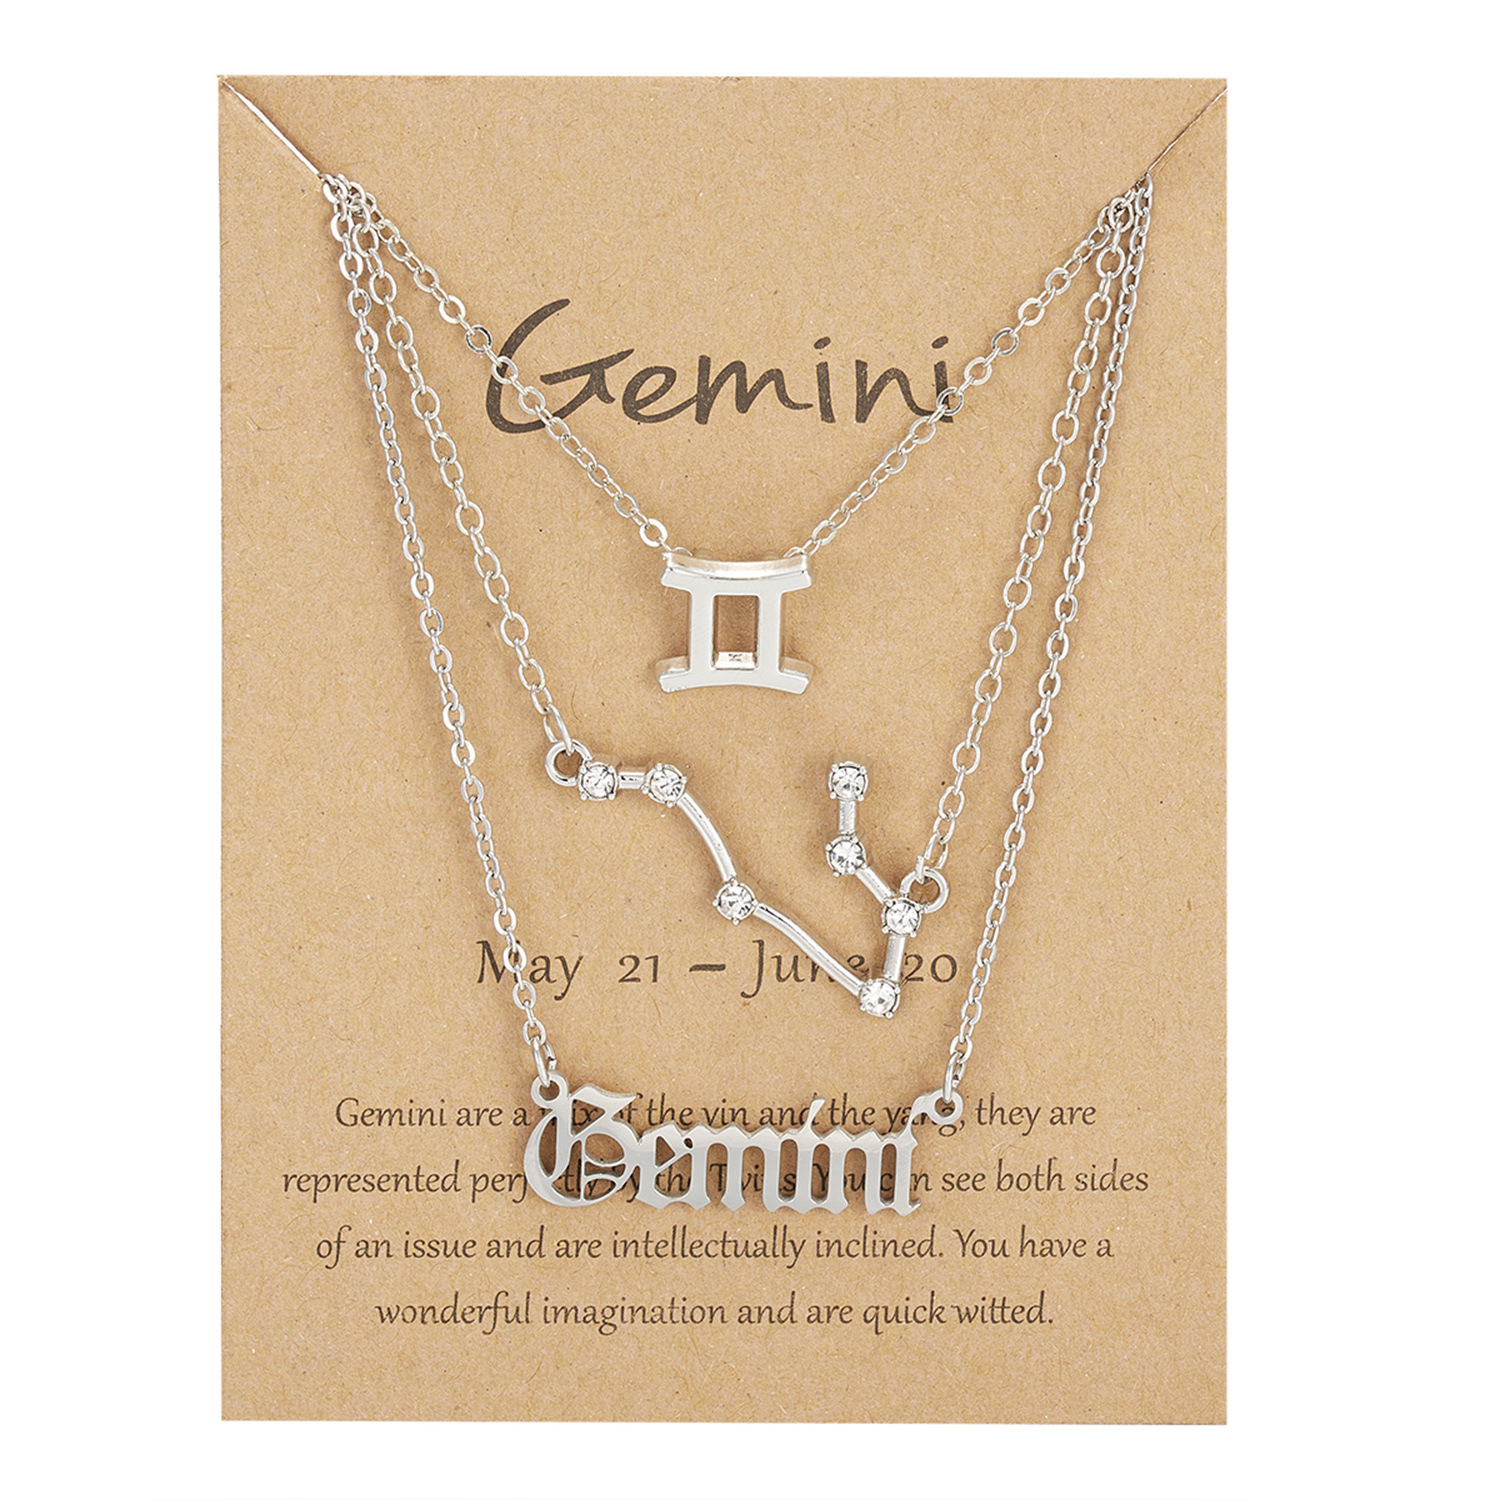 Gemini silver